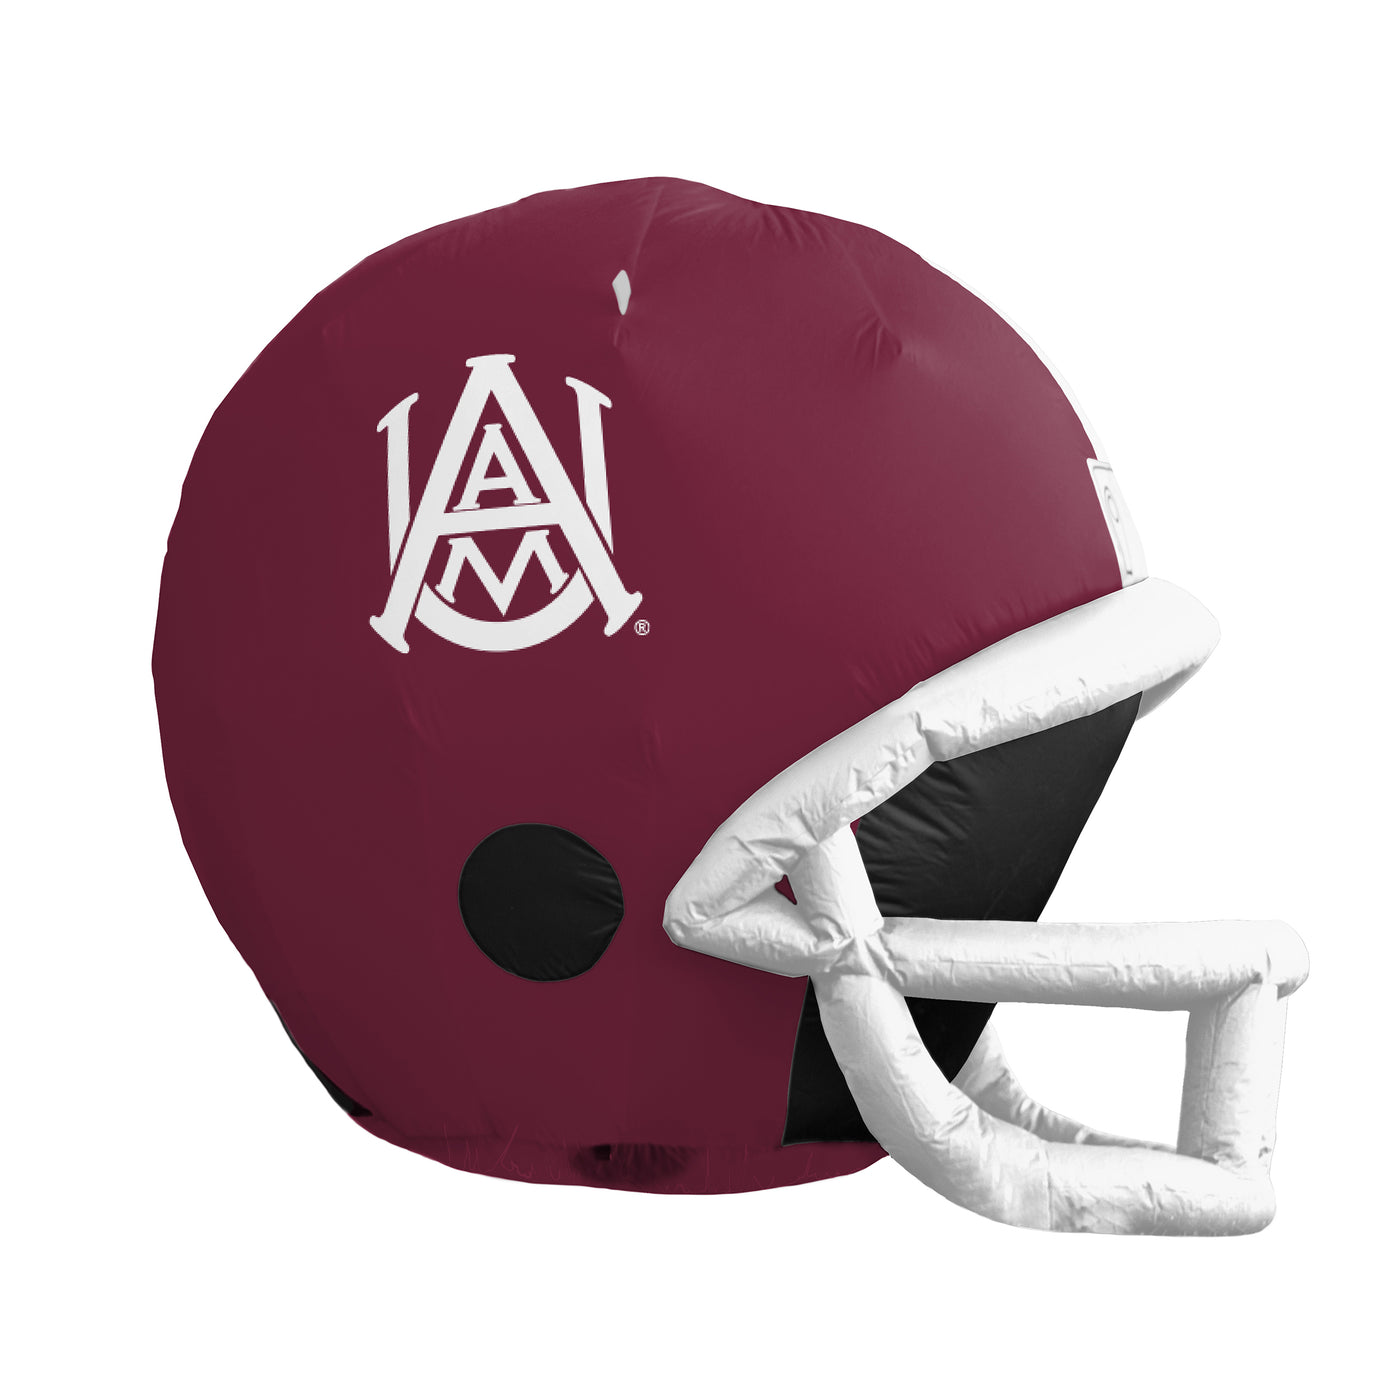 Alabama A&M Yard Inflatable Helmet